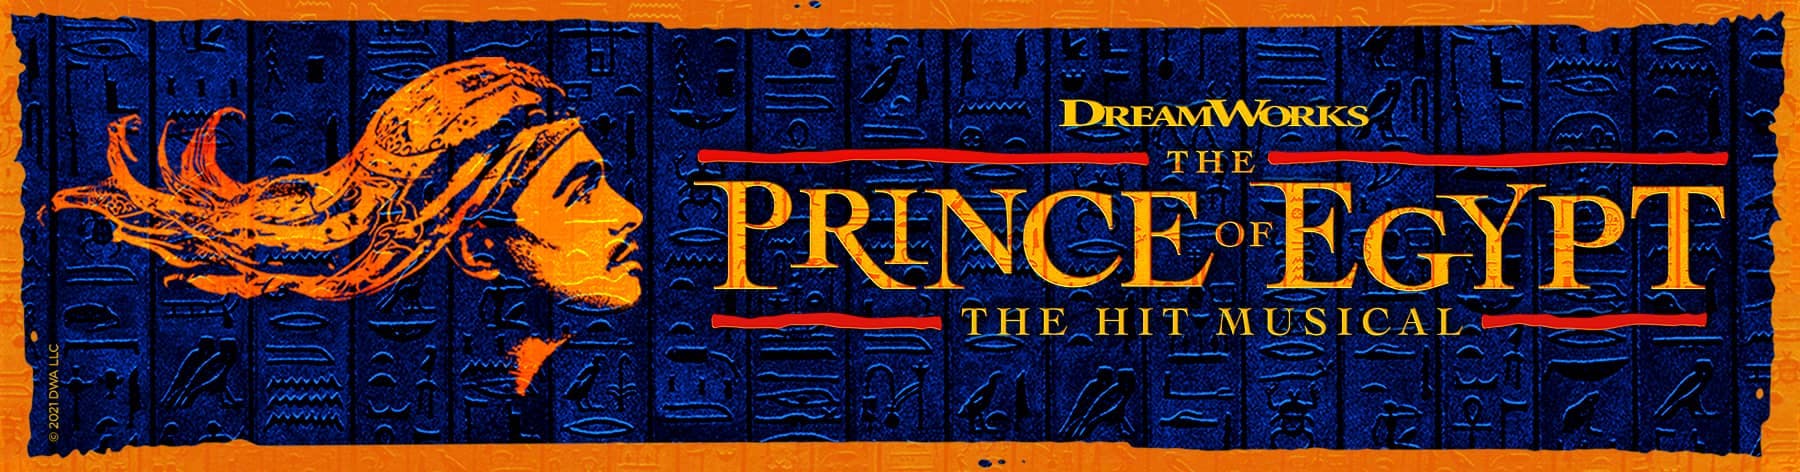 Prince of Egypt The Musical